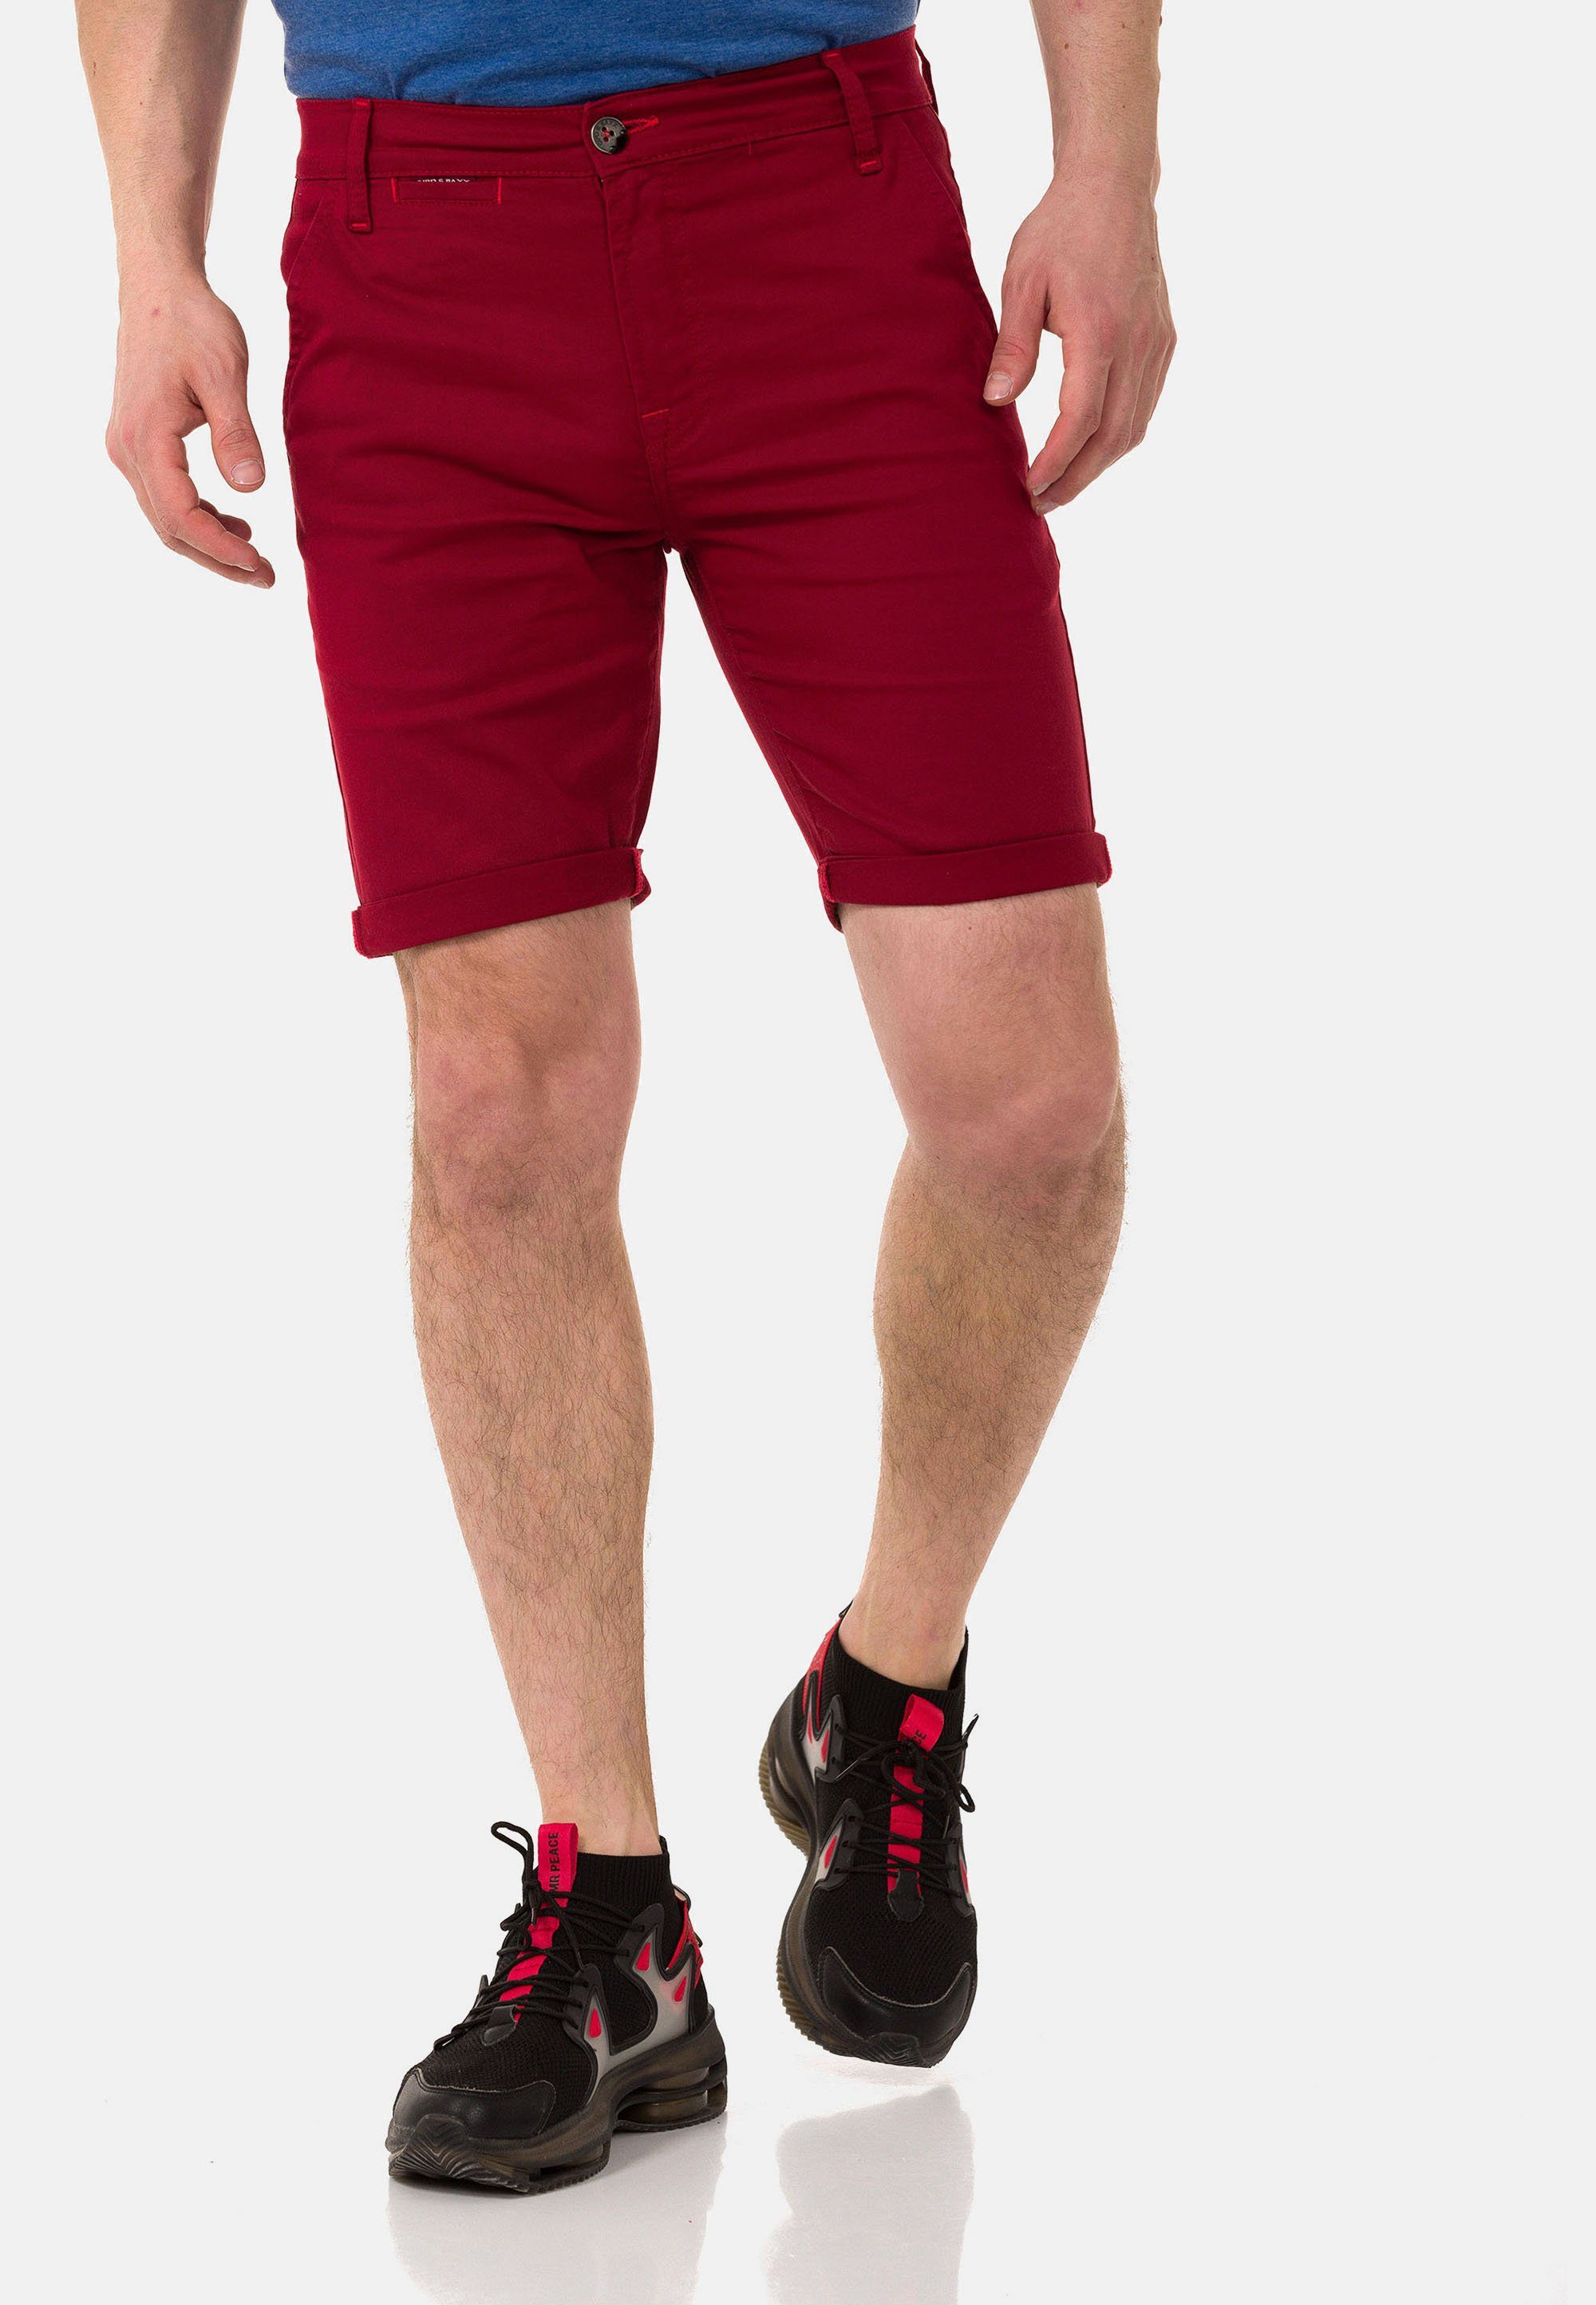 Cipo & Baxx Shorts im einfarbigen Look rot | Shorts